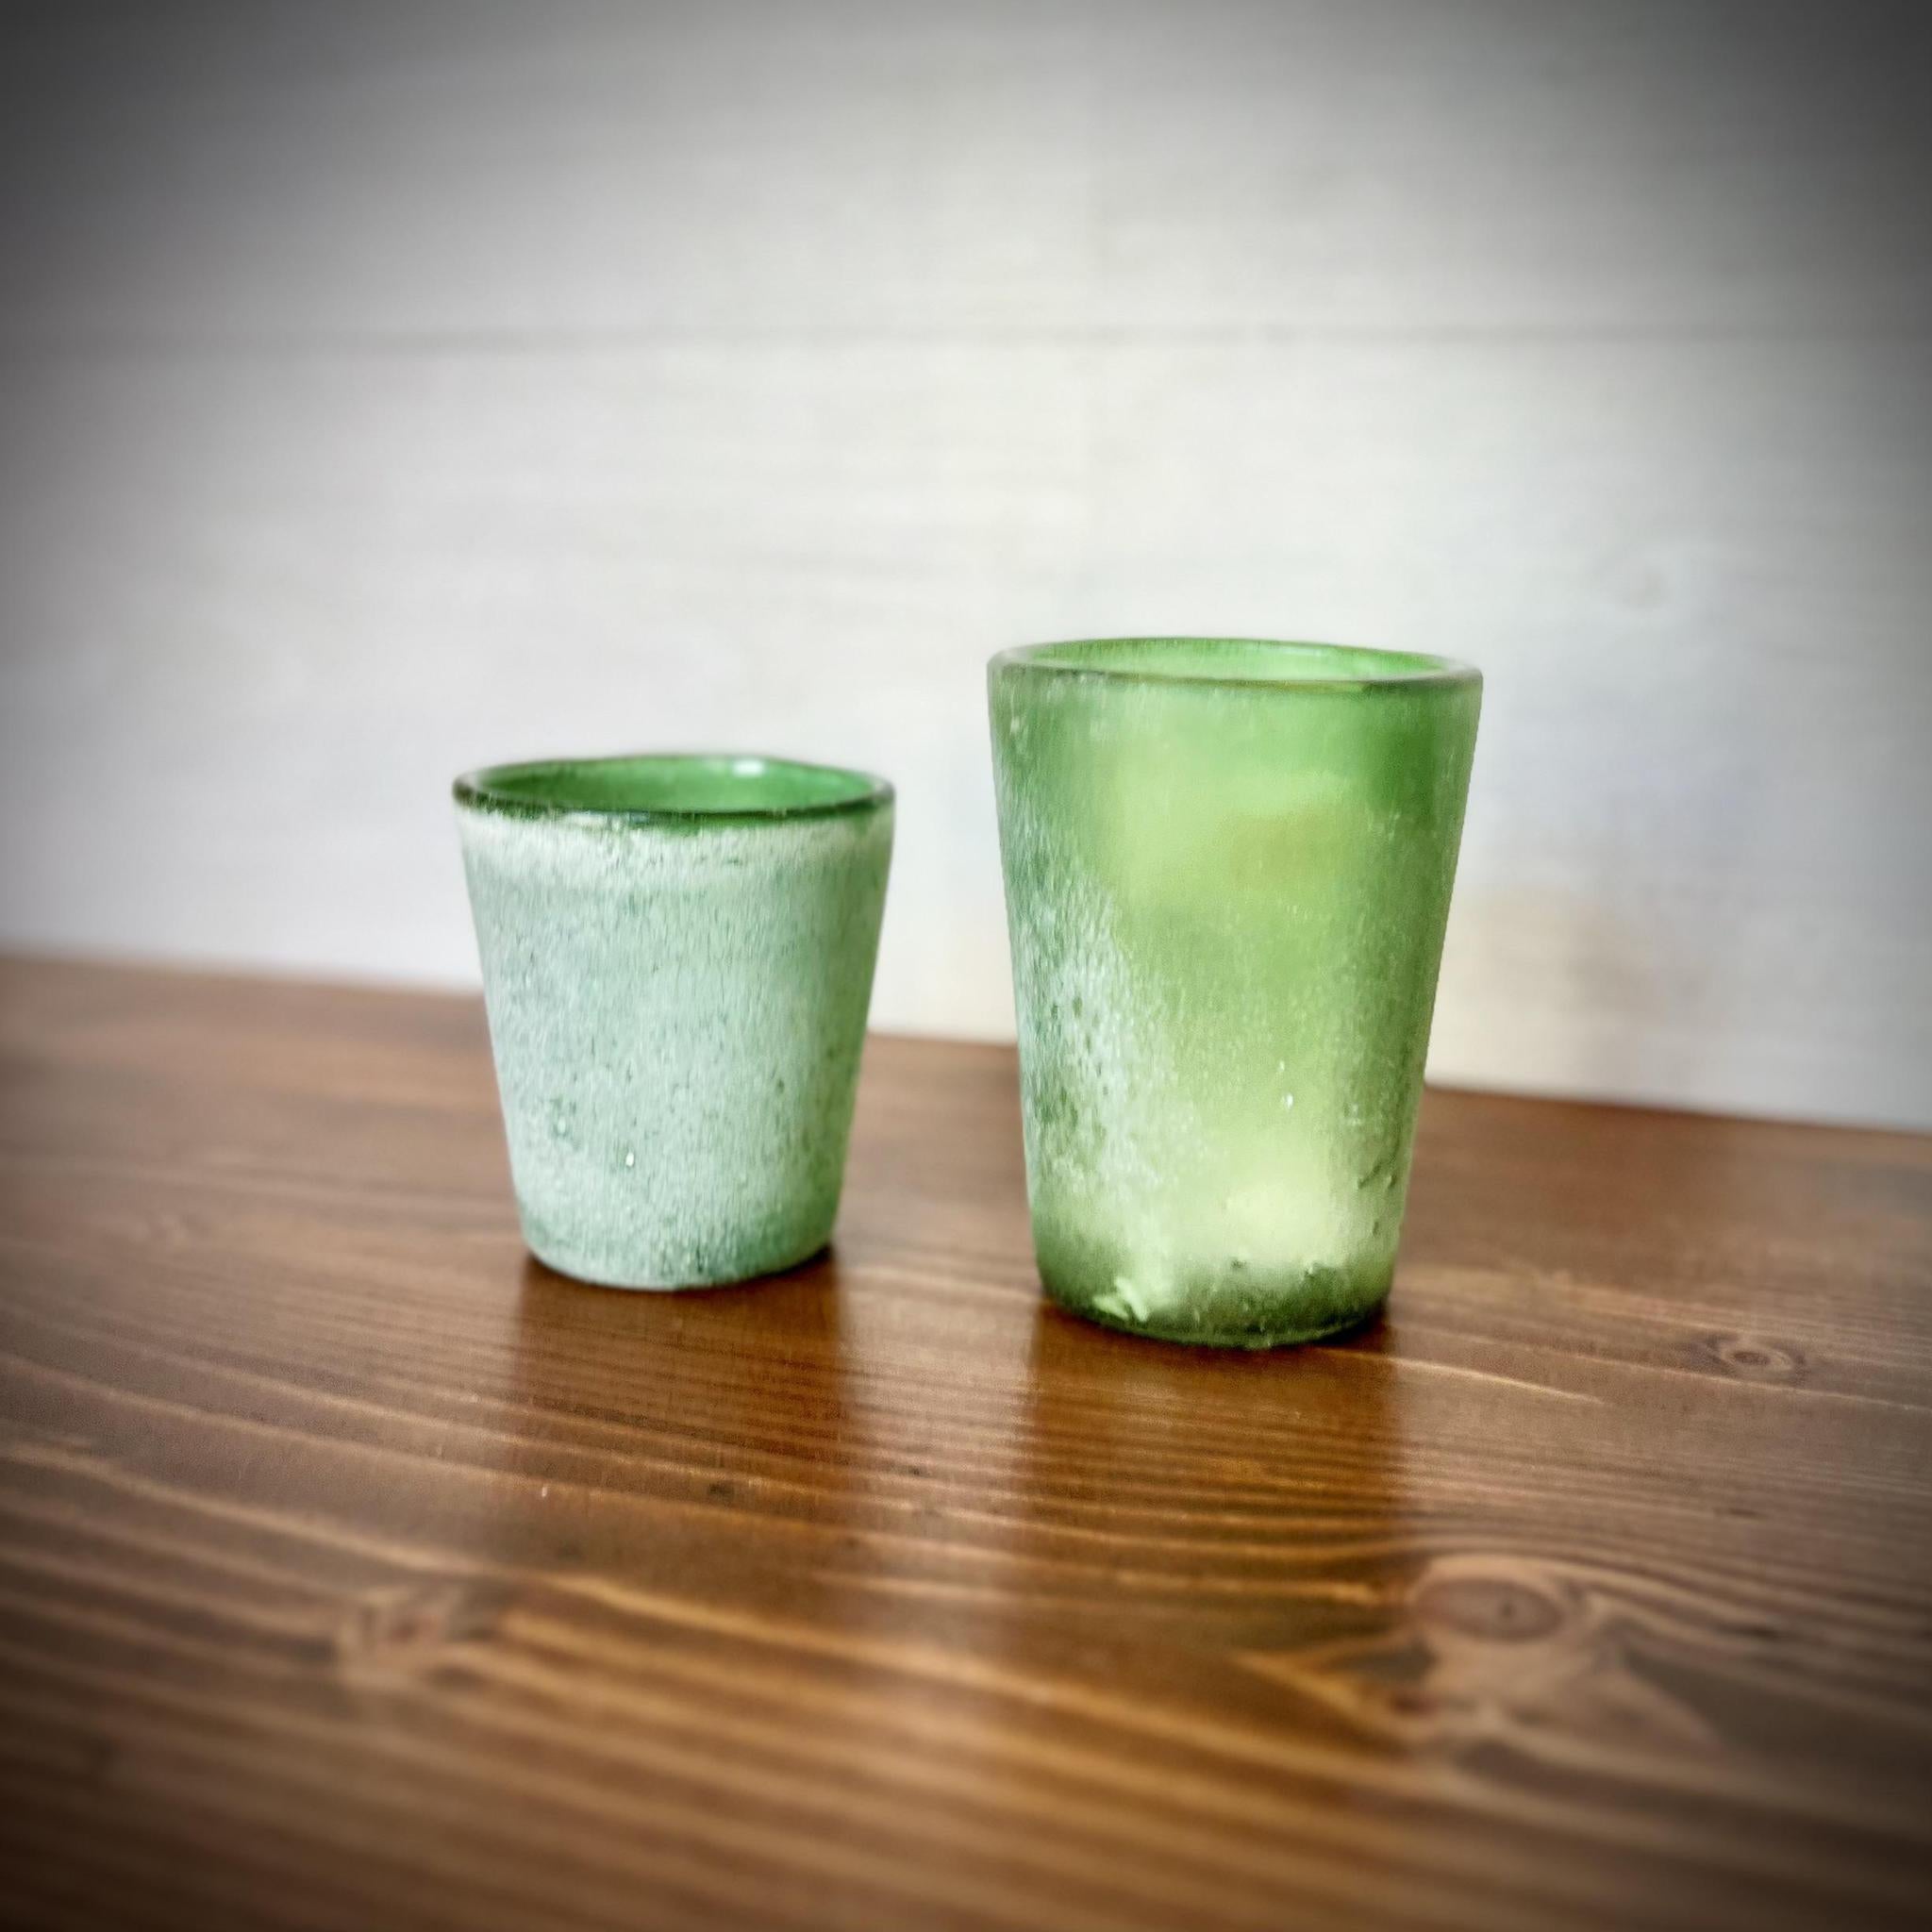 Verde Aged Glass Vase - 3"Di x 4"H